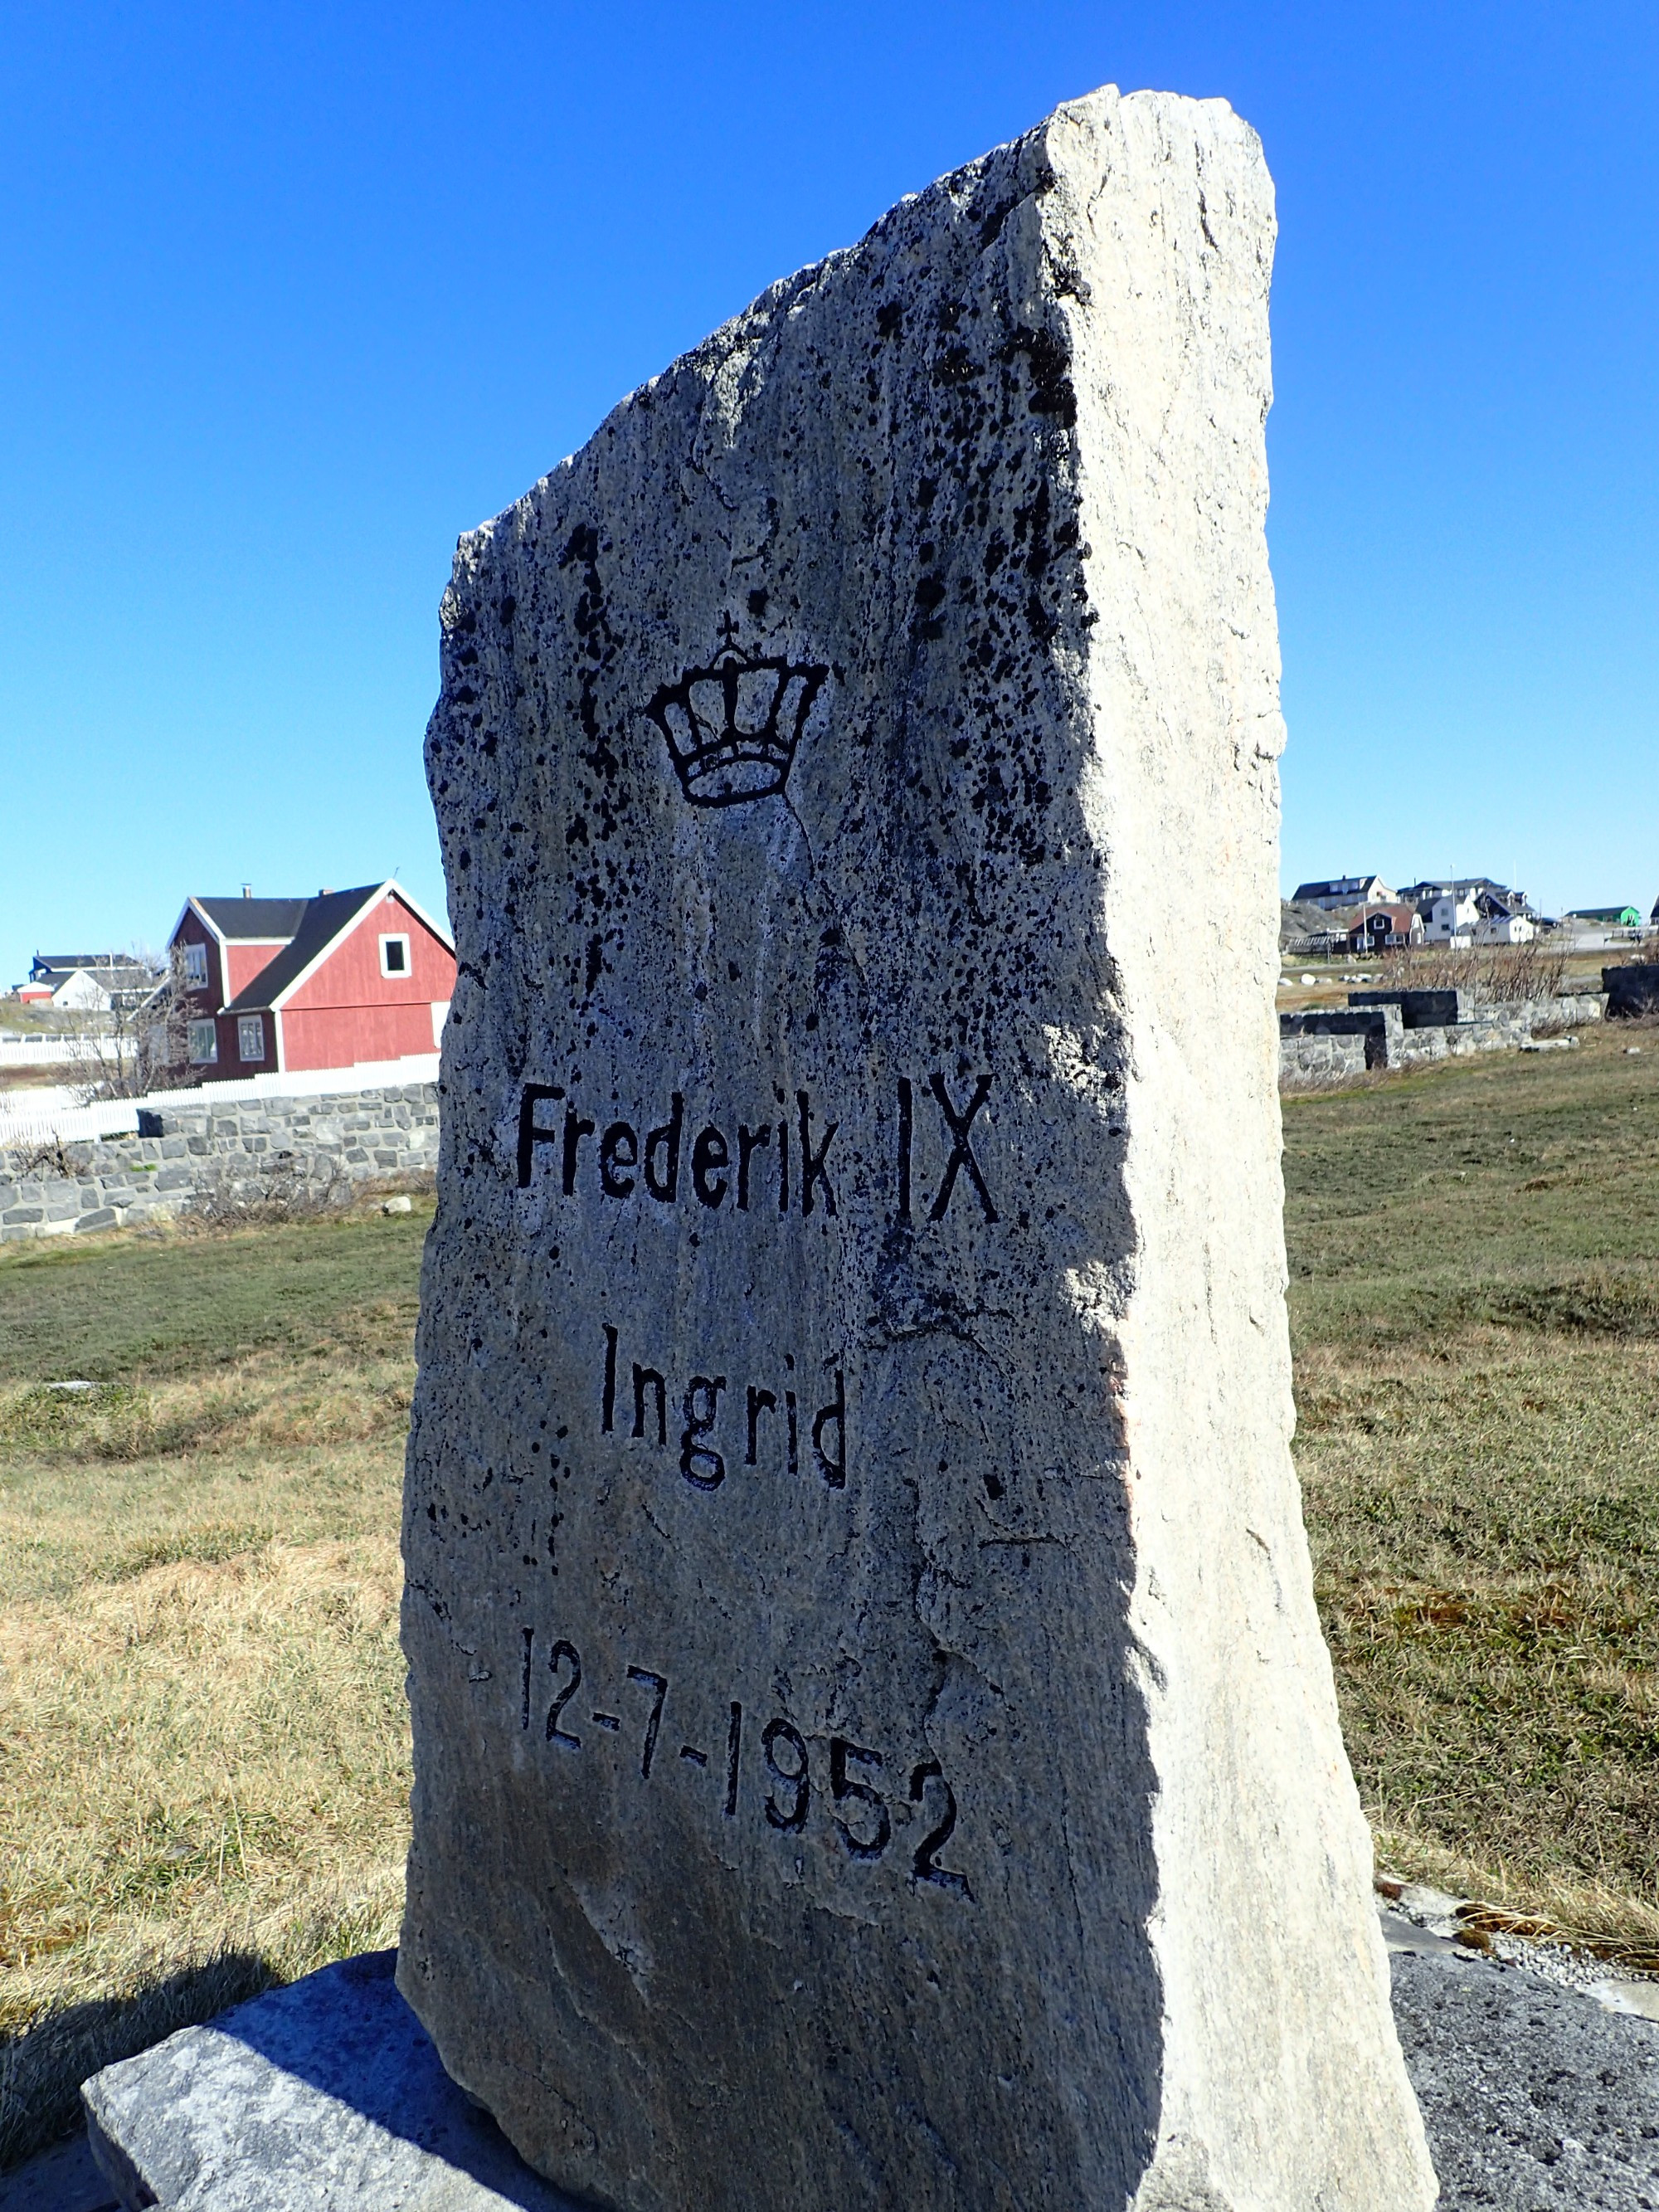 Frederik IX & Ingrid Royal Visit Monument, Greenland